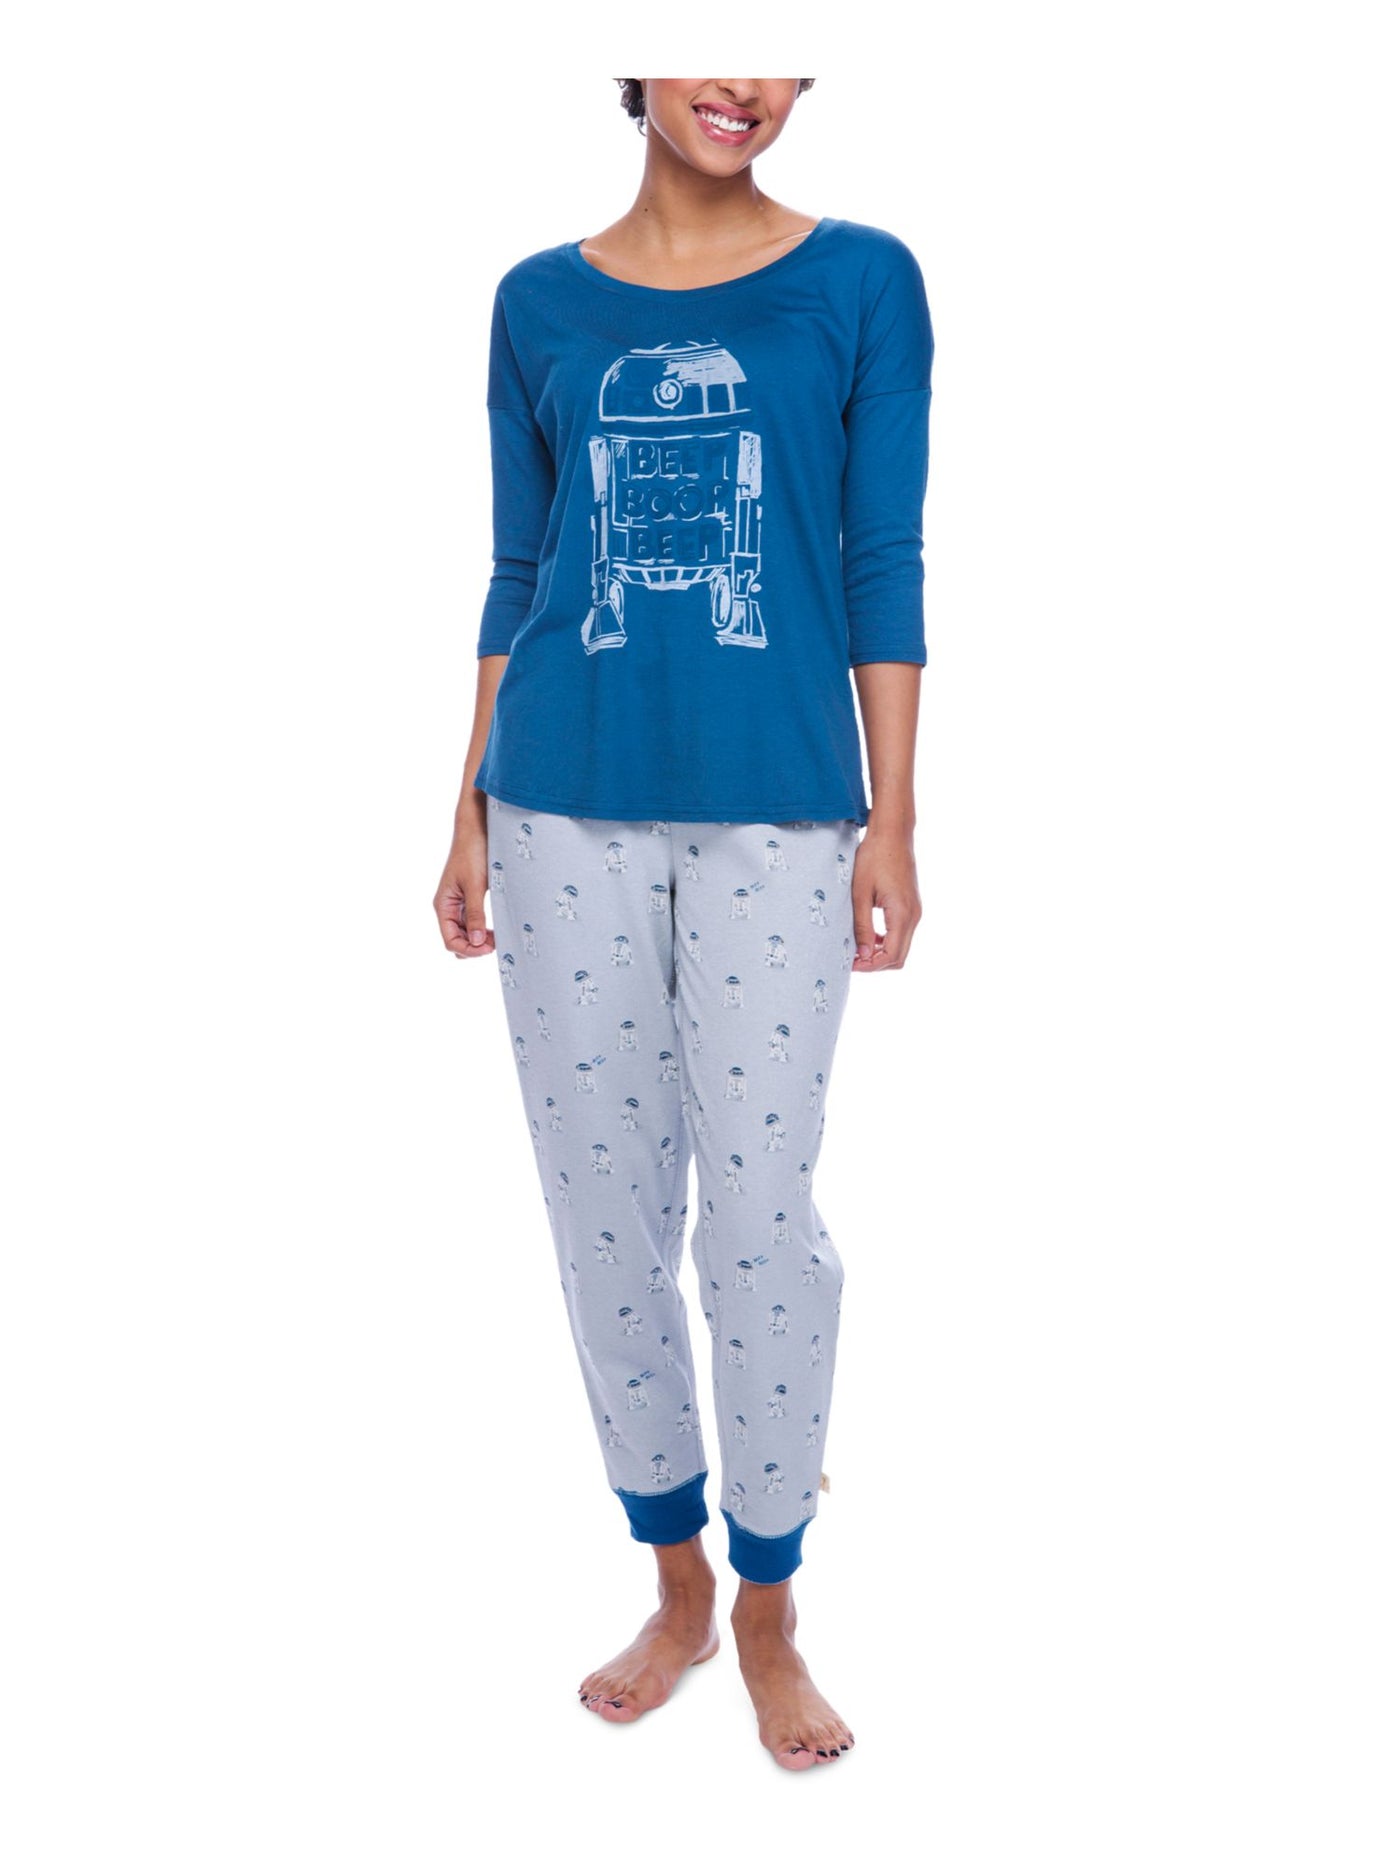 MUNKI MUNKI Intimates Blue 3/4 Sleeves Sleep Shirt Pajama Top S